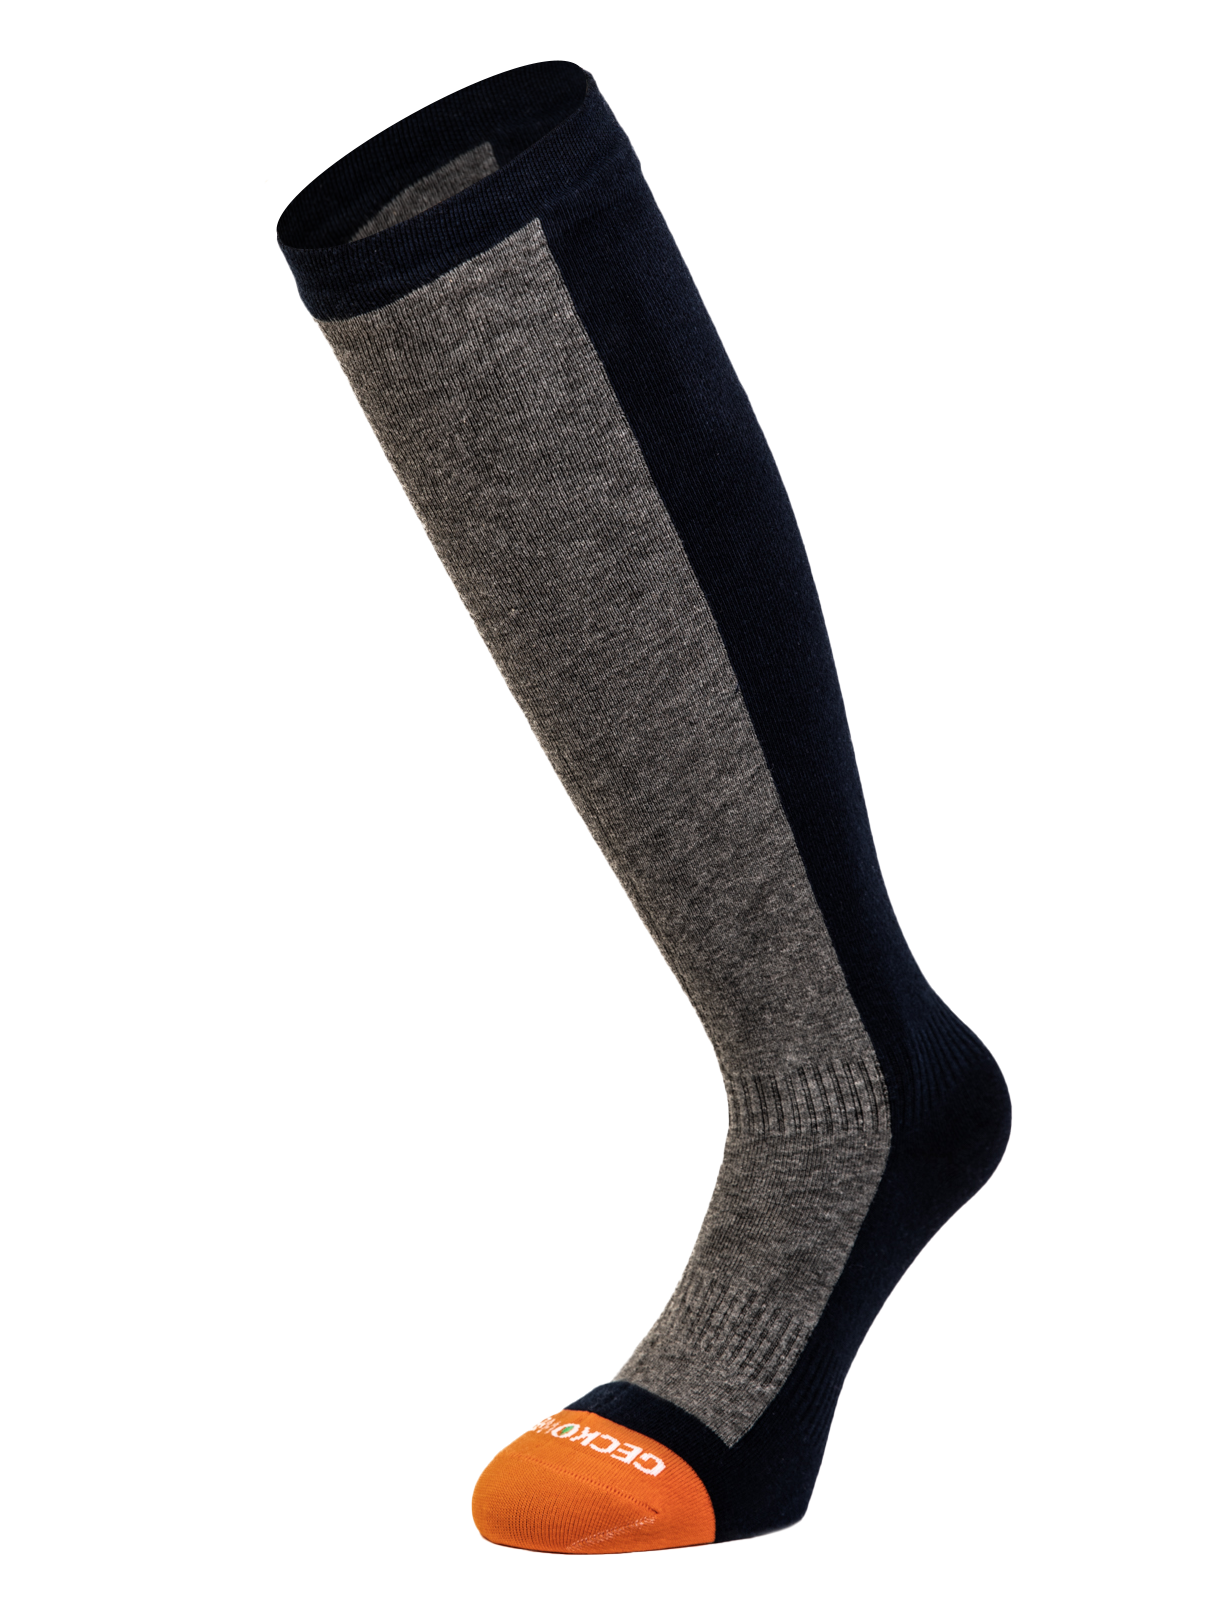 Knee Length Lightweight Waterproof Socks | Lightweight